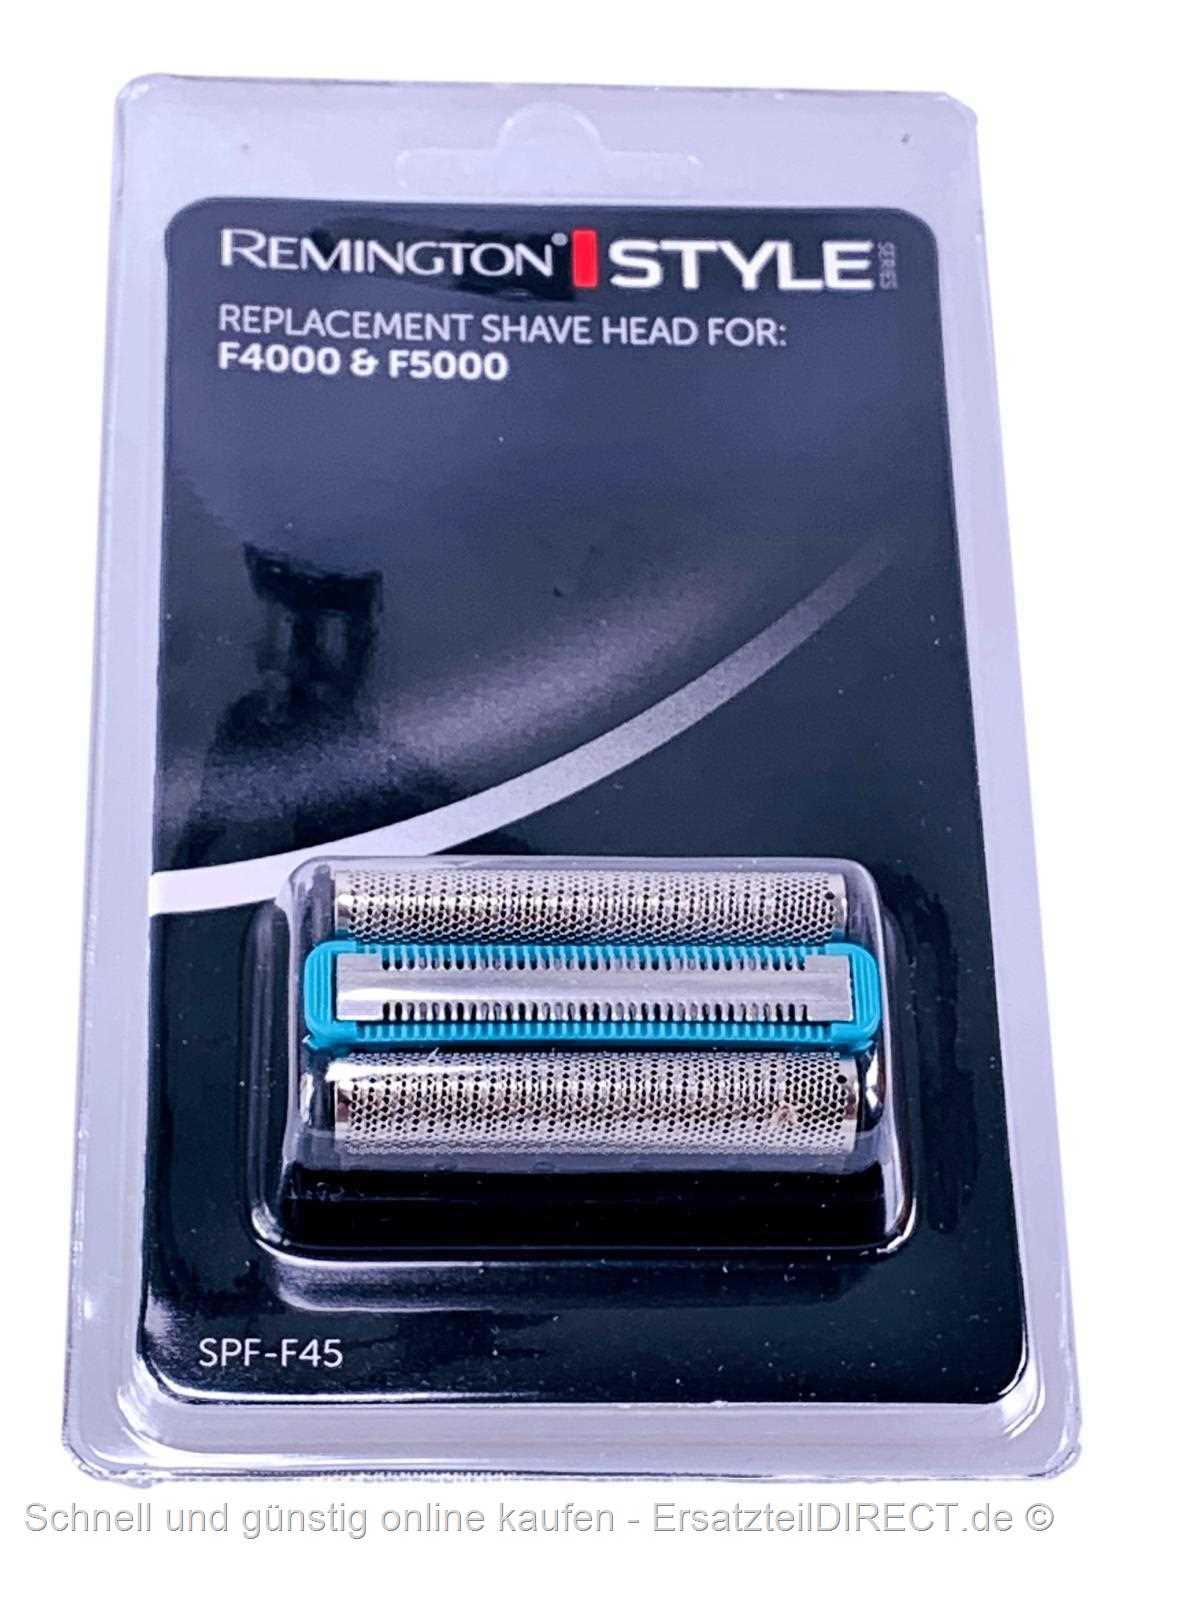 Remington Rasierer Kombipack bei SPFF45 SPF-F45 günstig F4000 F5000 kaufen SPF-F45